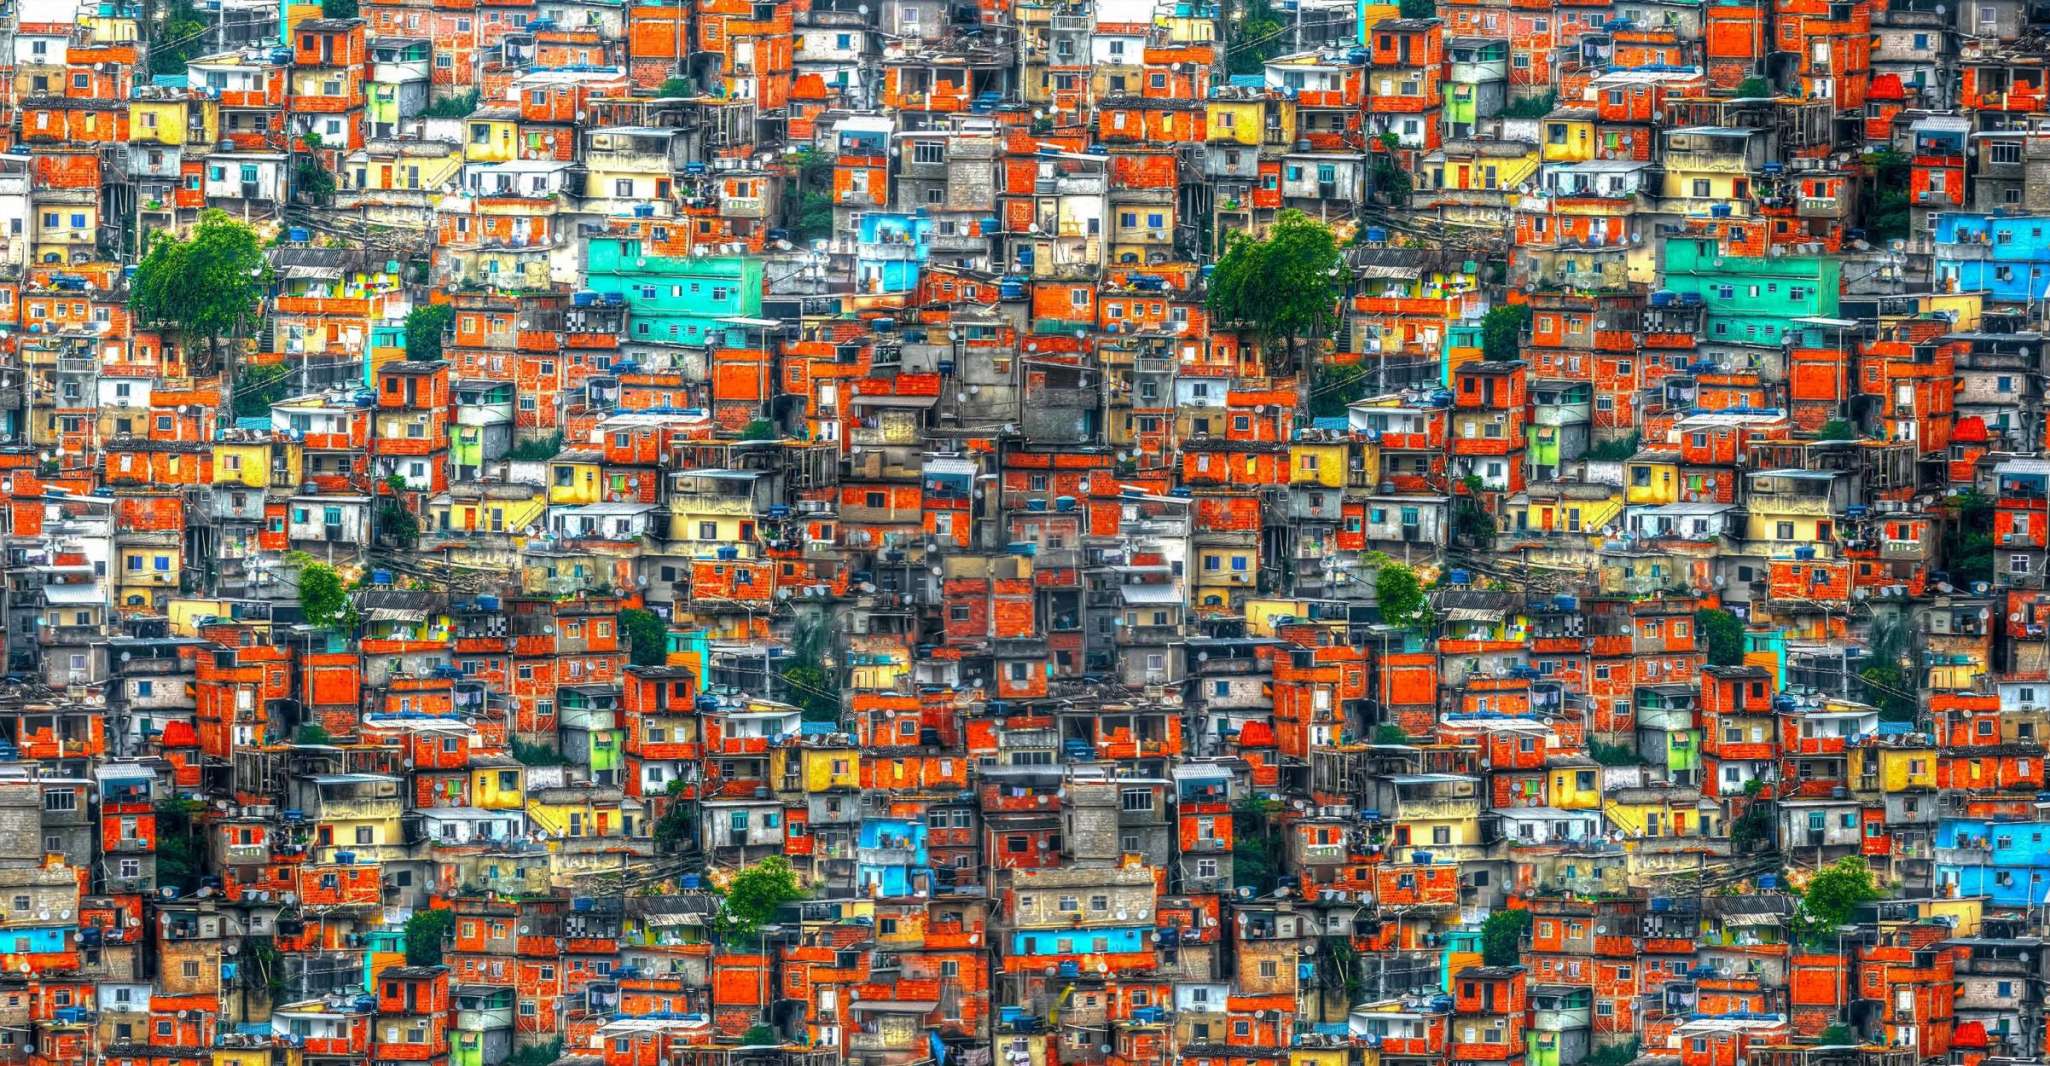 Rio de Janeiro, Rocinha Favela Walking Tour with Local Guide - Housity